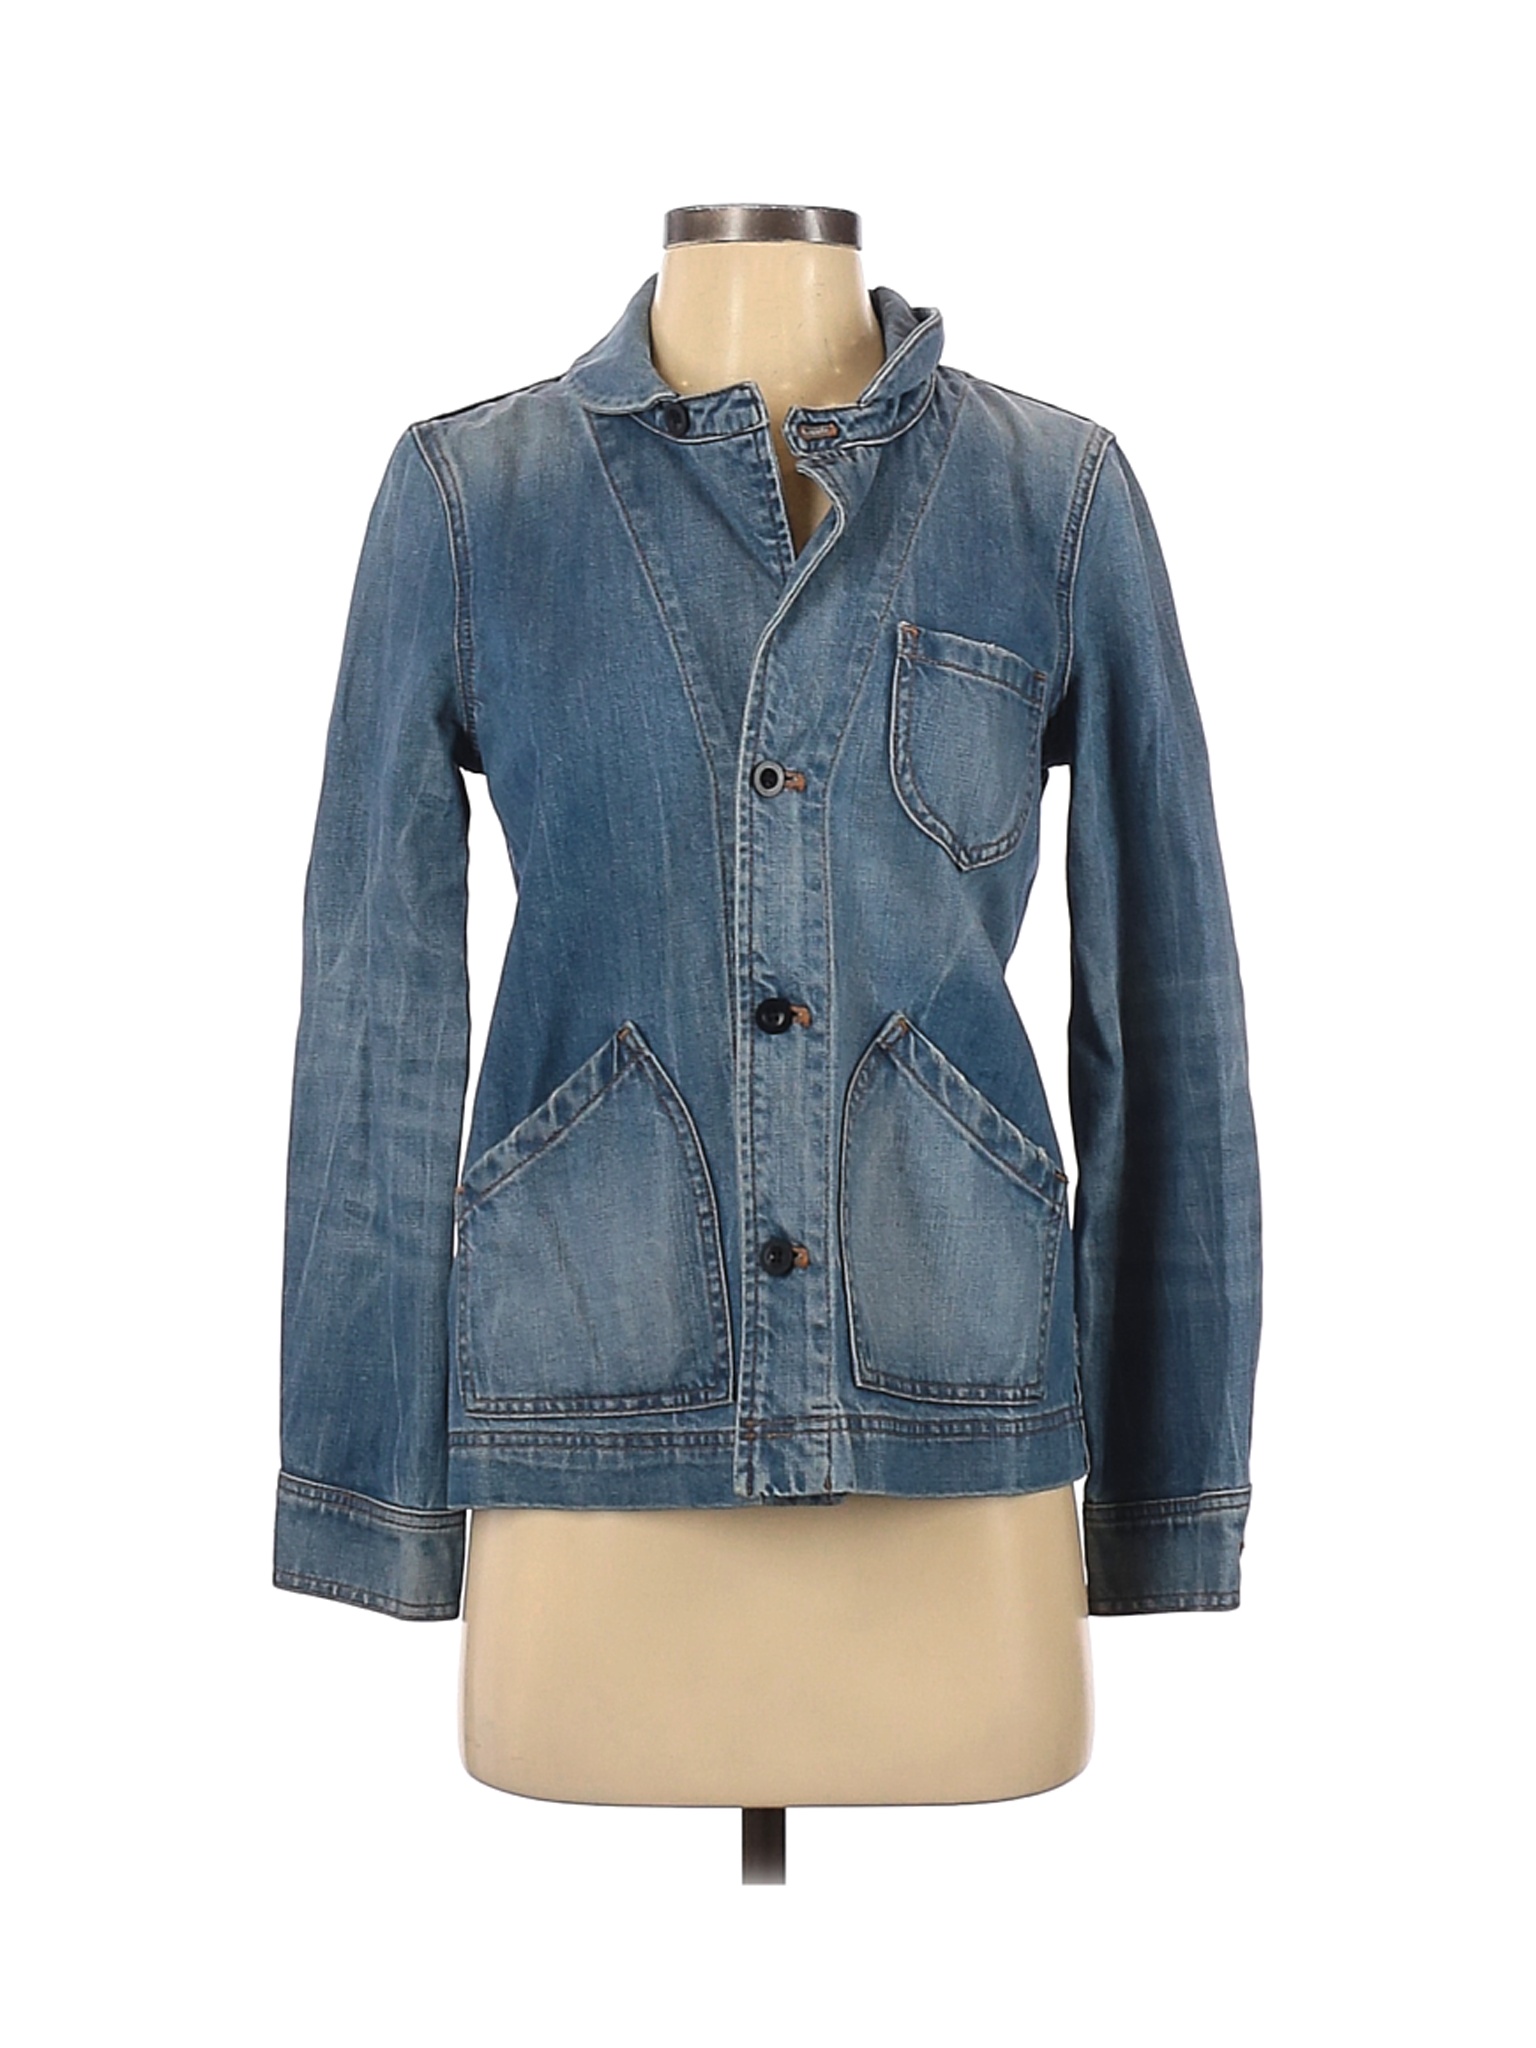 Madewell Women Blue Denim Jacket S | eBay